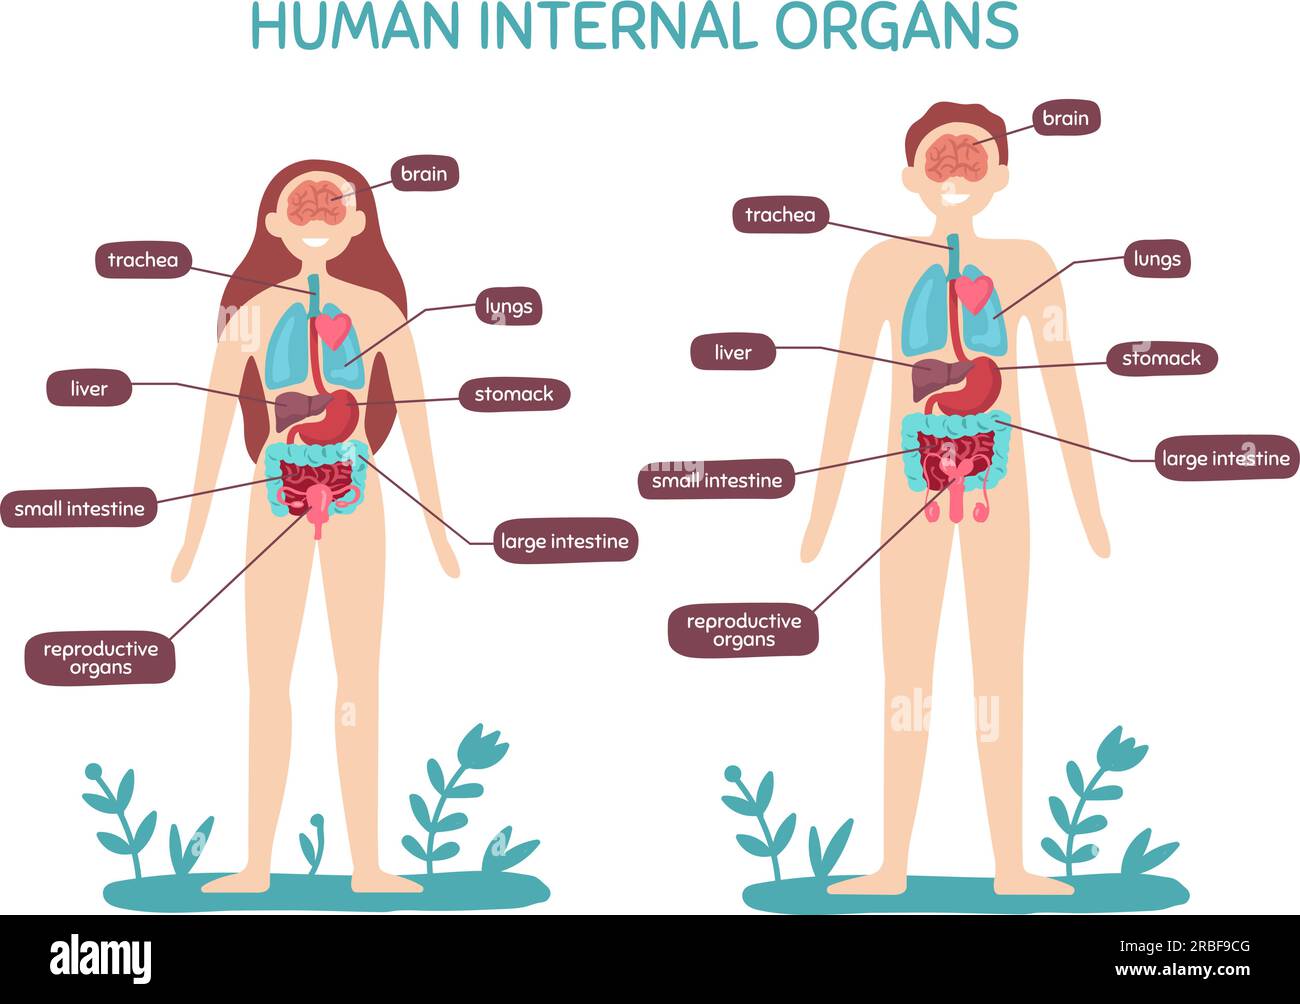 https://c8.alamy.com/comp/2RBF9CG/cartoon-human-body-anatomy-male-and-female-internal-organs-humans-physiology-chart-anatomical-medicine-infographic-healthcare-education-information-2RBF9CG.jpg